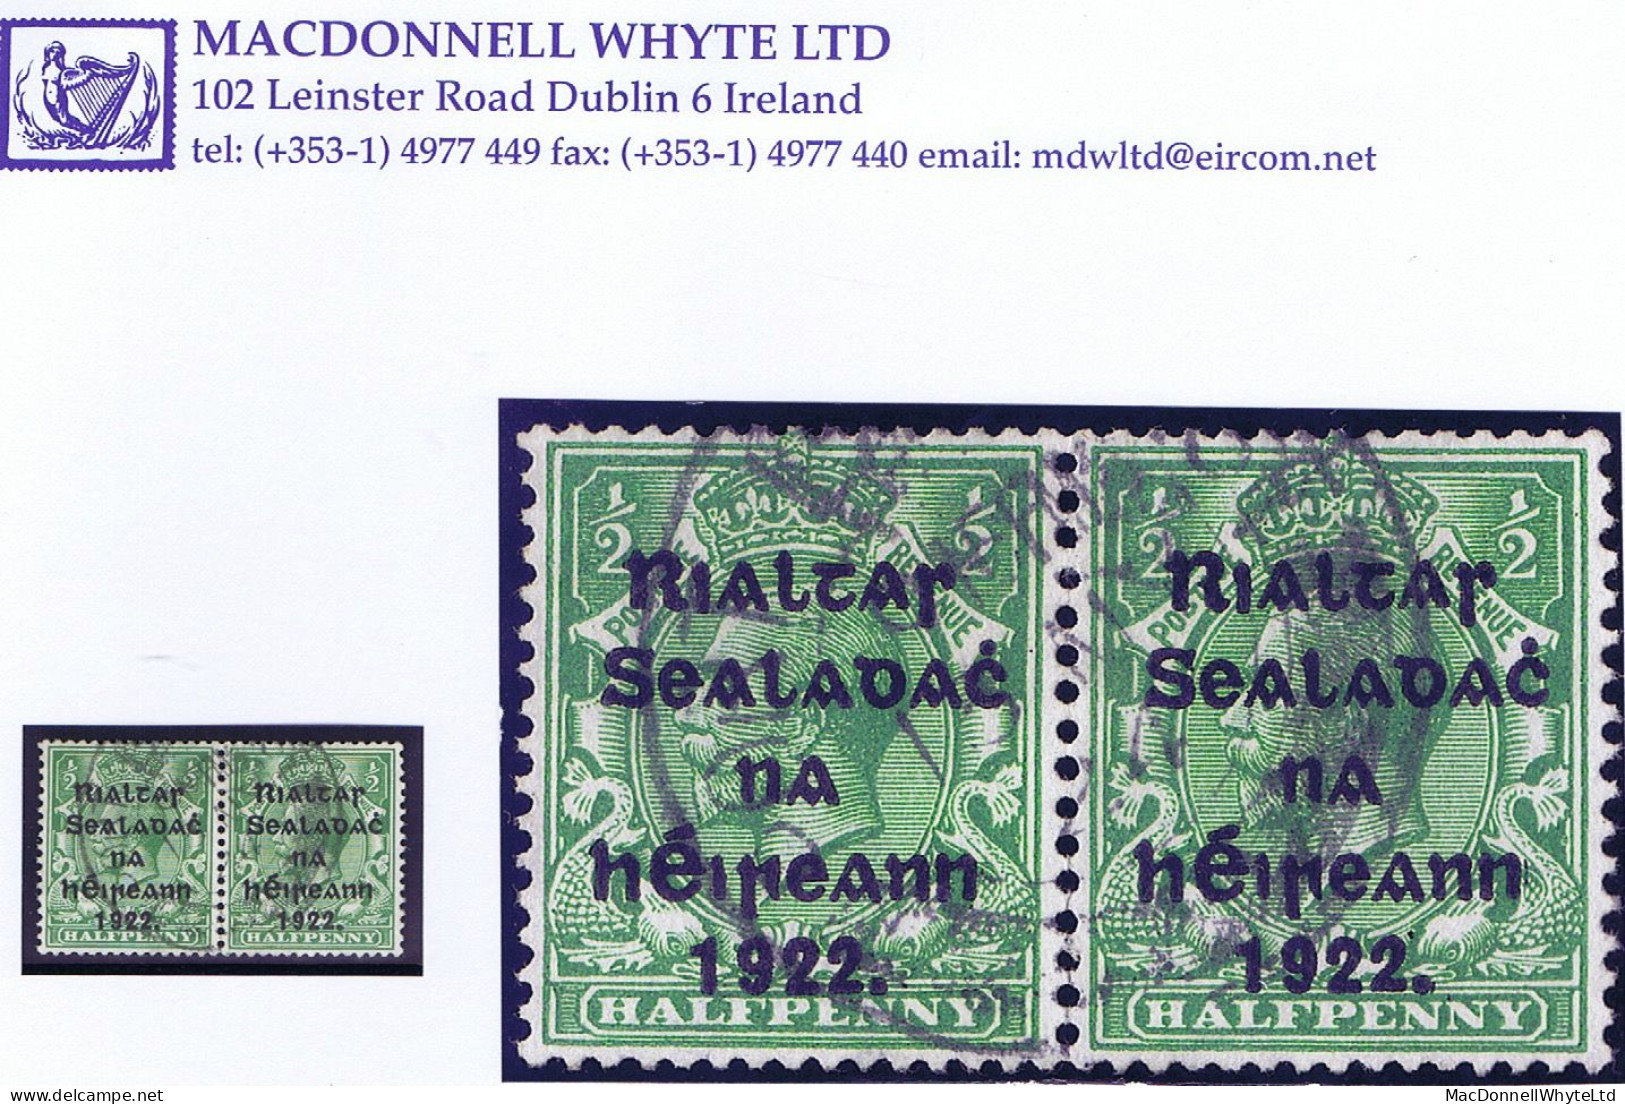 Ireland 1922 Harrison Rialtas 5-line Coils ½d Green Horizontal Pair Fine Used 1924 PORT LAOIGHISE Cds - Gebraucht